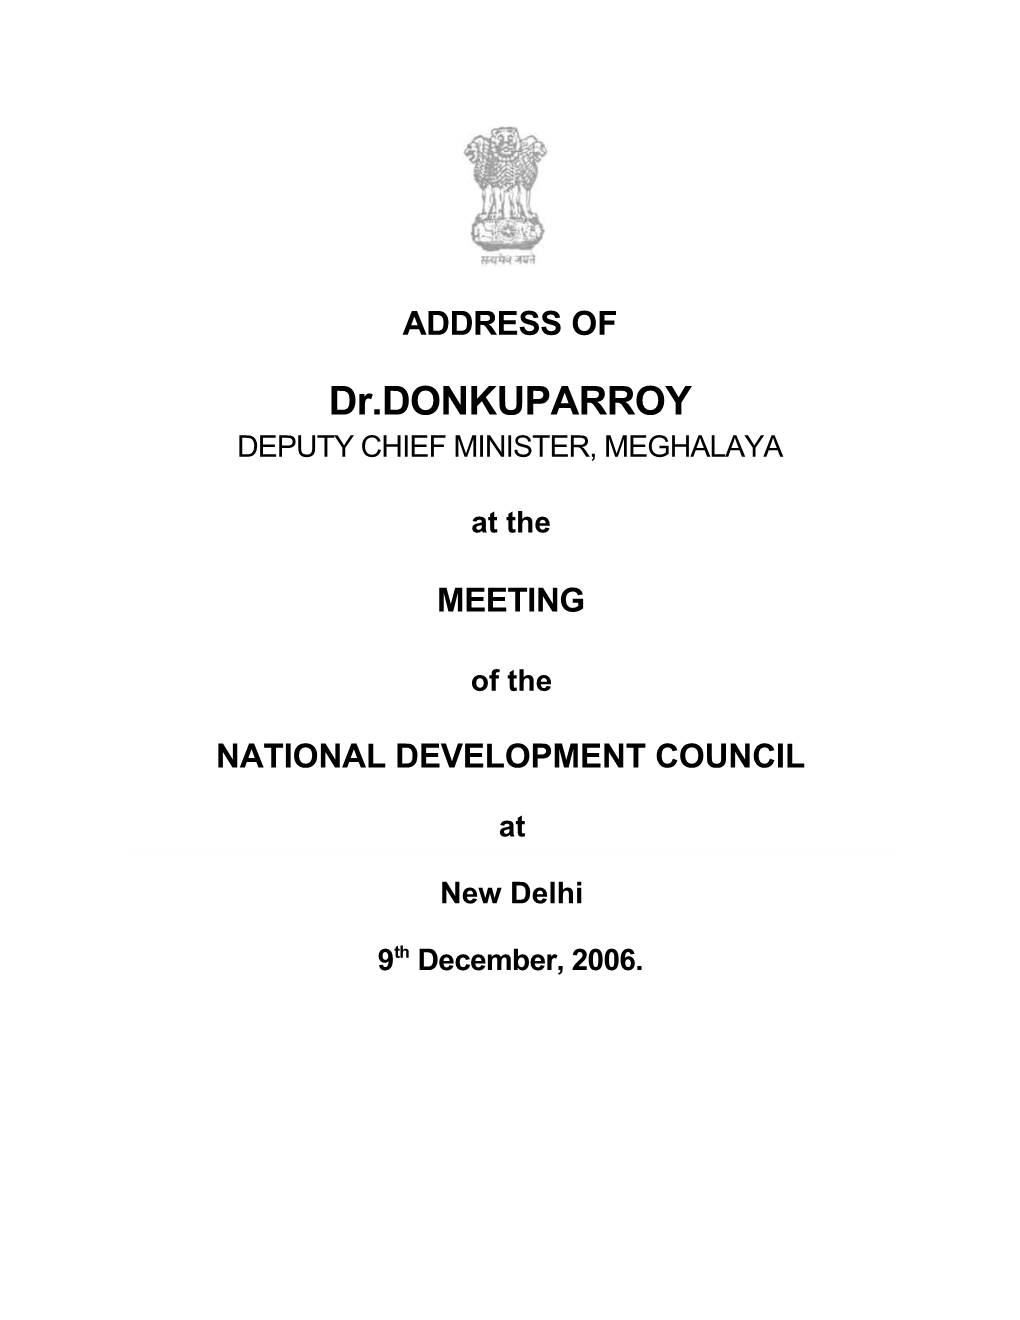 Deputy Chief Minister, Meghalaya